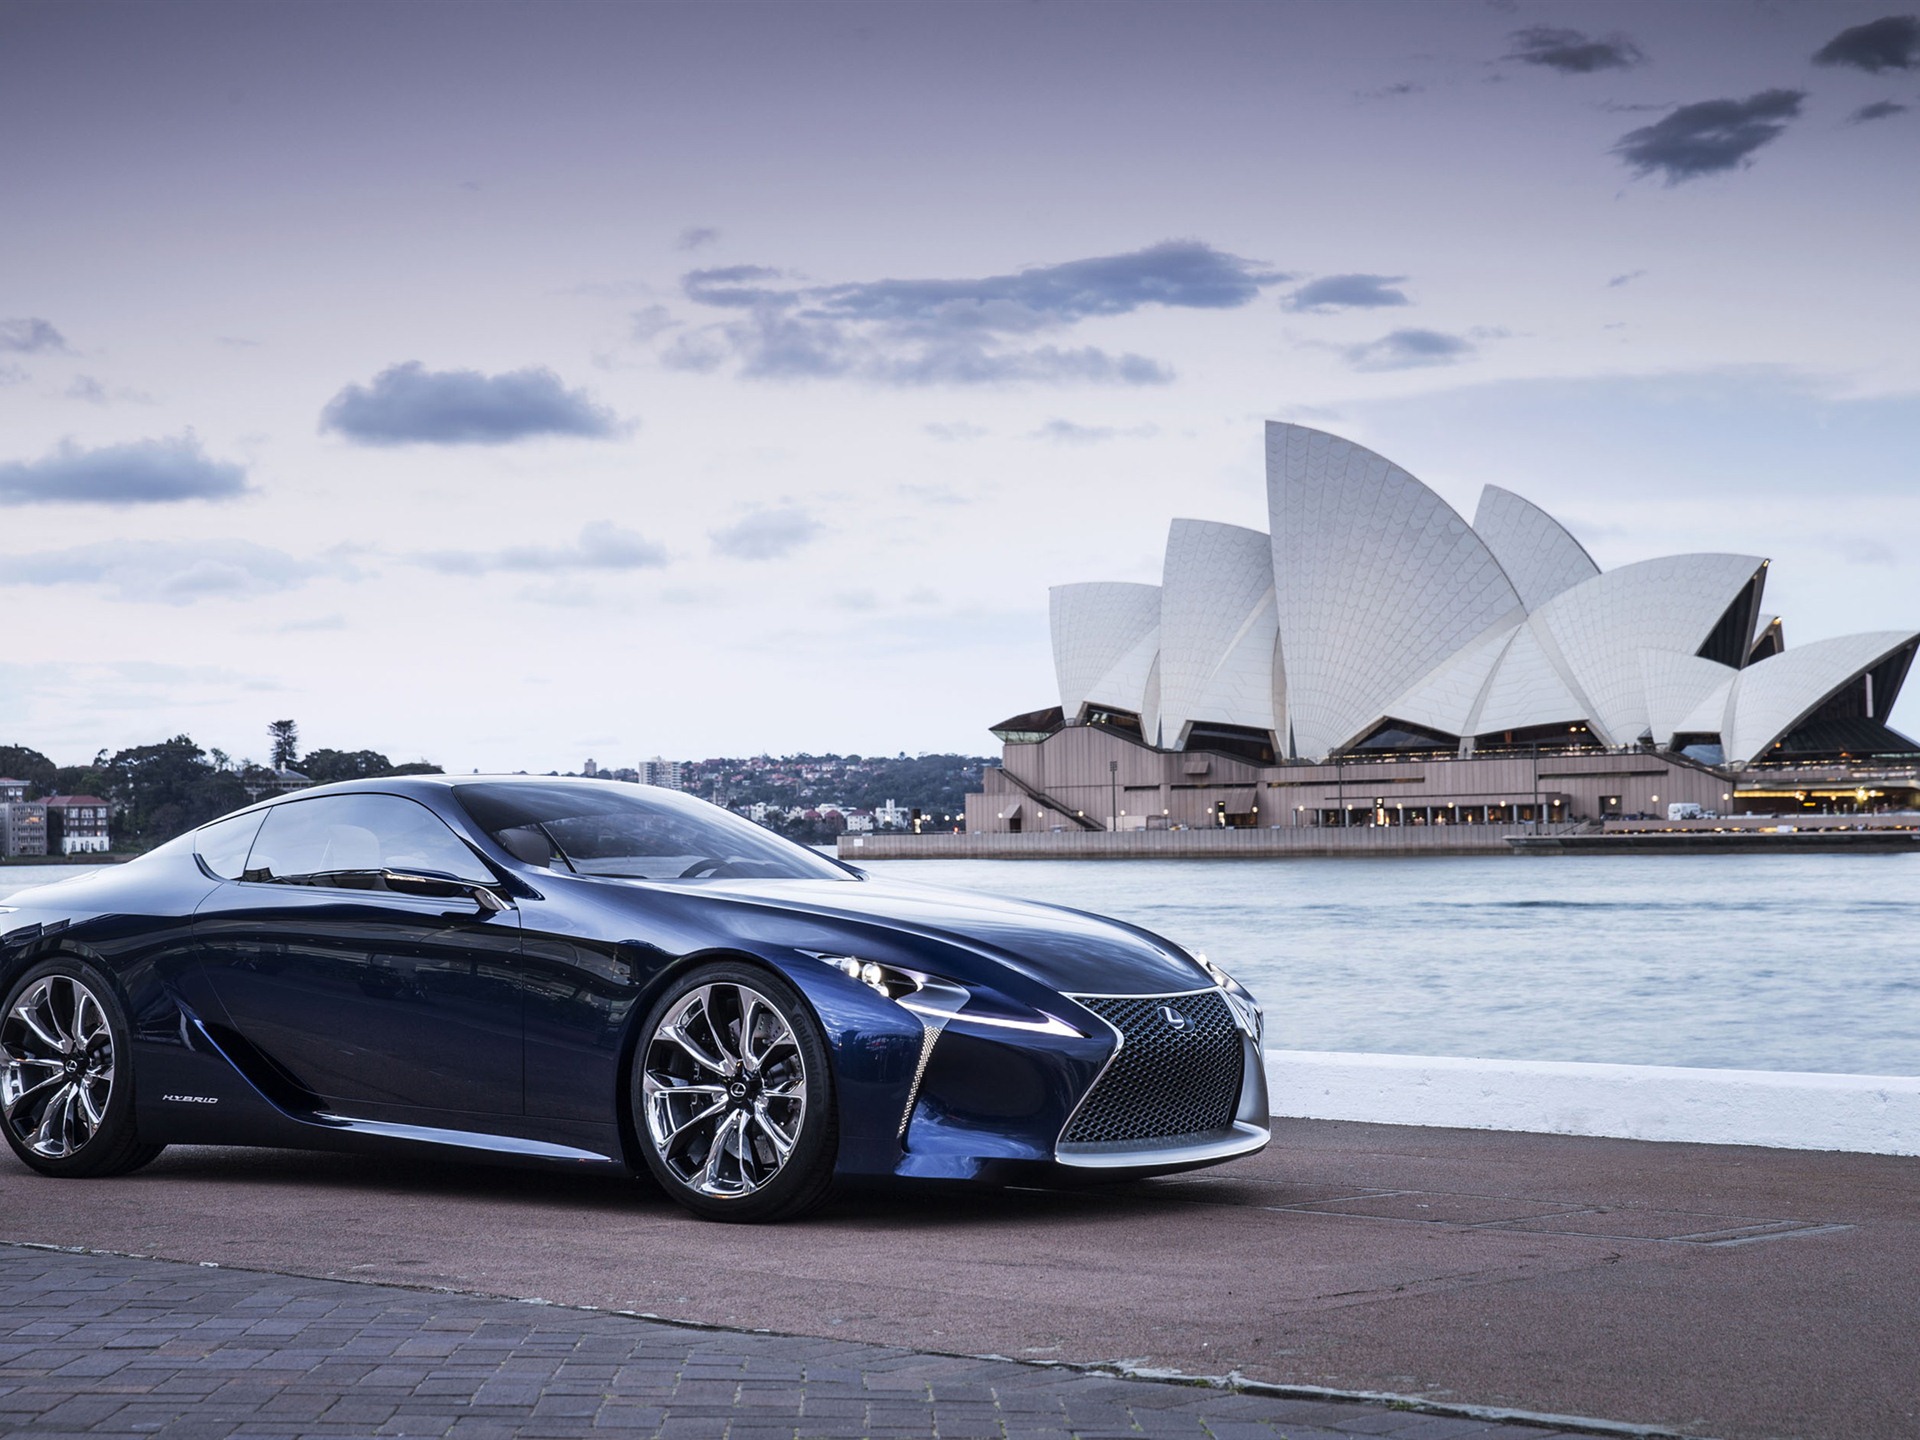 2012 Lexus LF-LC Blue concept 雷克萨斯 蓝色概念车 高清壁纸2 - 1920x1440